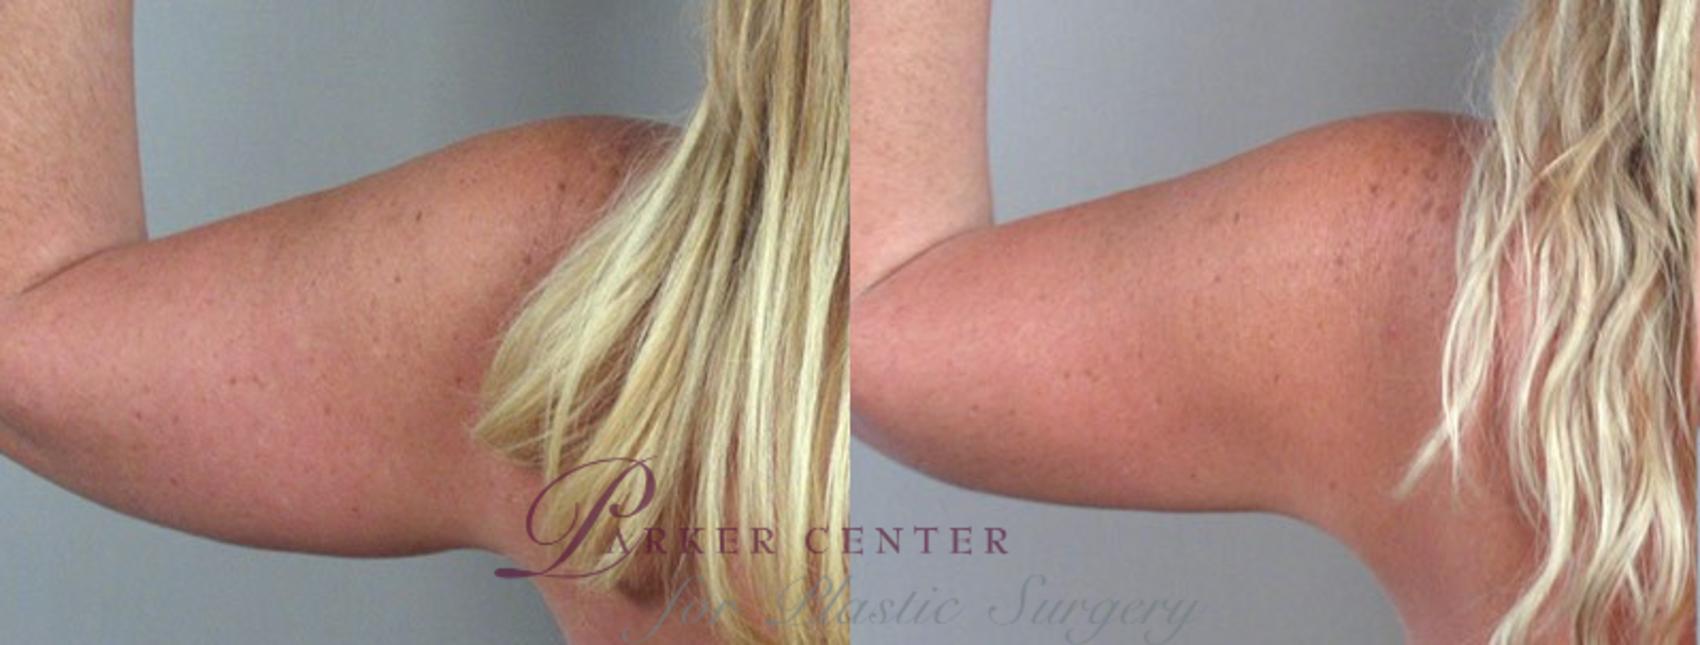 Upper Arm Rejuvenation Case 824 Before & After View #3 | Paramus, New Jersey | Parker Center for Plastic Surgery